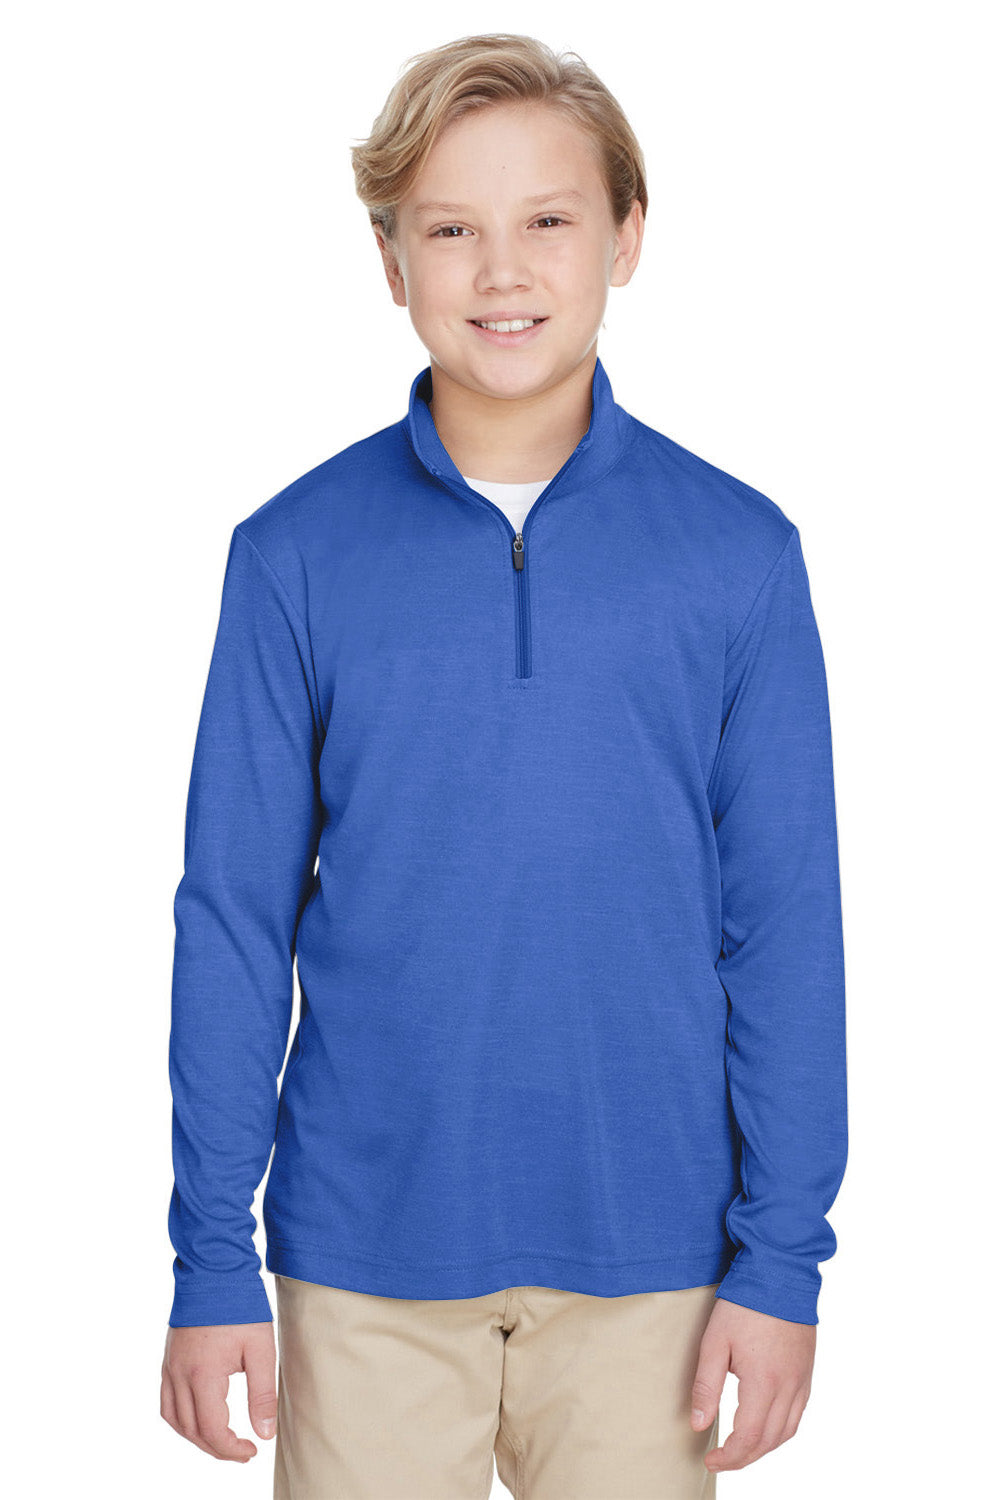 Team 365 TT31HY Youth Zone Sonic Performance Moisture Wicking 1/4 Zip Sweatshirt Royal Blue Front